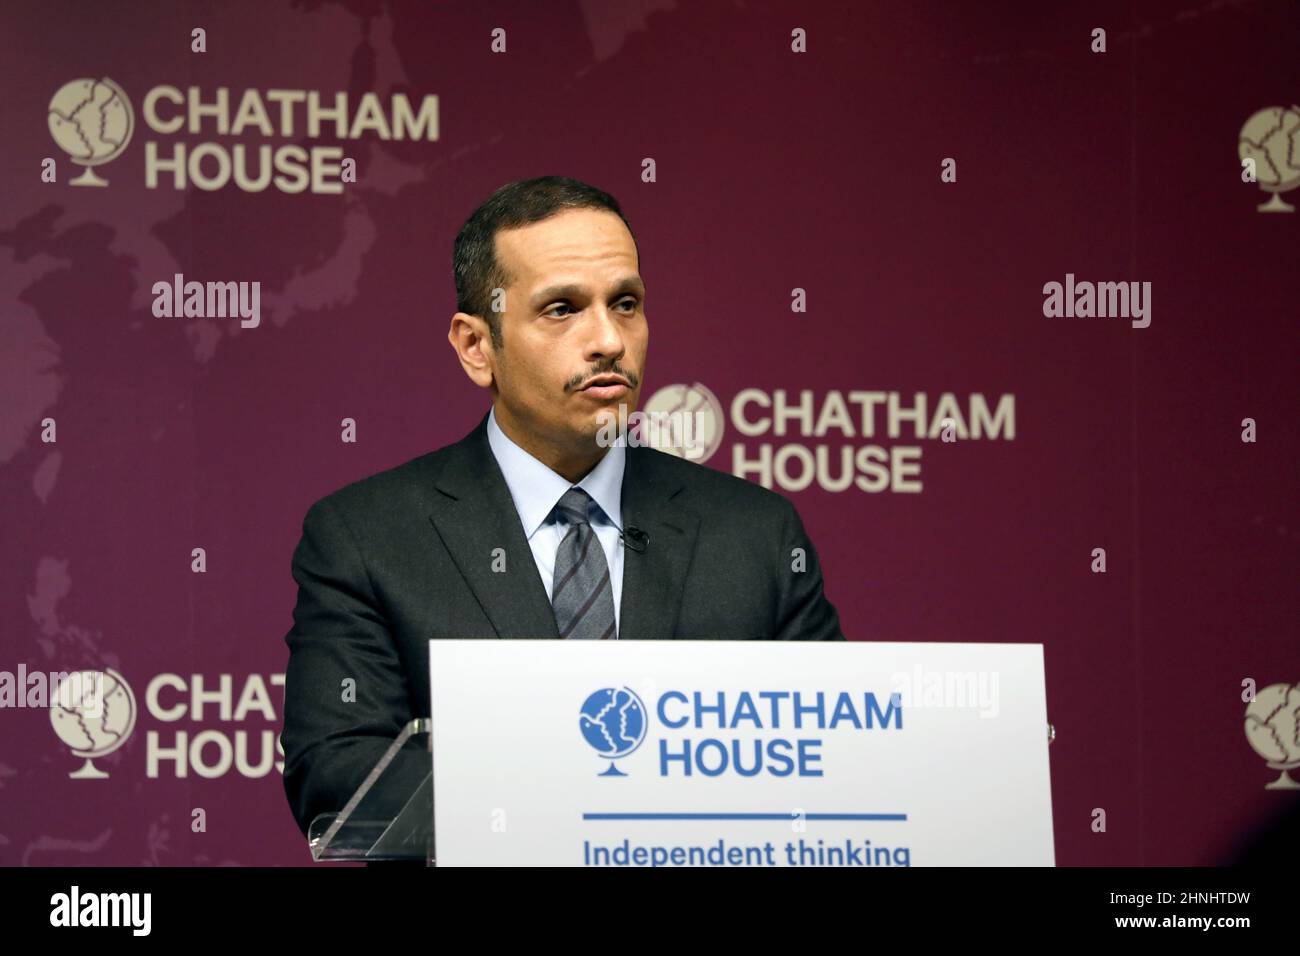 Qatar’s foreign affairs minister Sheikh Mohammed Bin Abdulrahman Al-Thani speaking at Chatham House, London on 17 February, 2022 Stock Photo